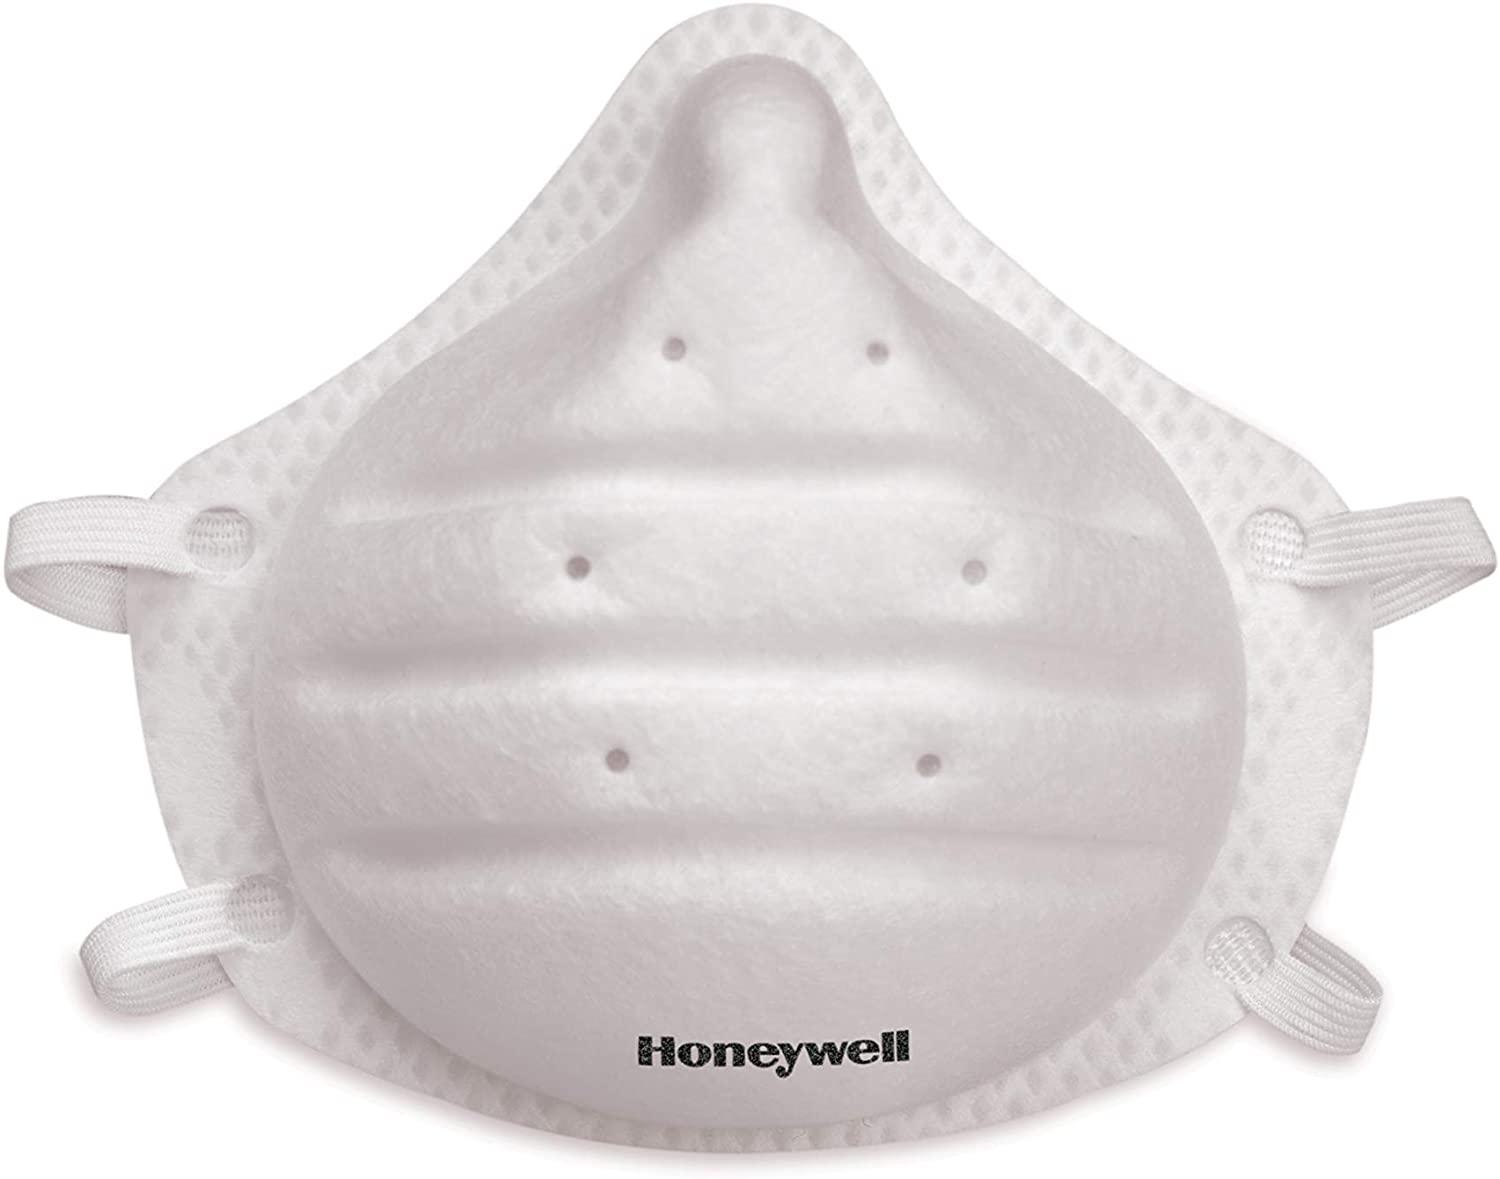 20 Honeywell Disposable Respirator Masks for $13.99